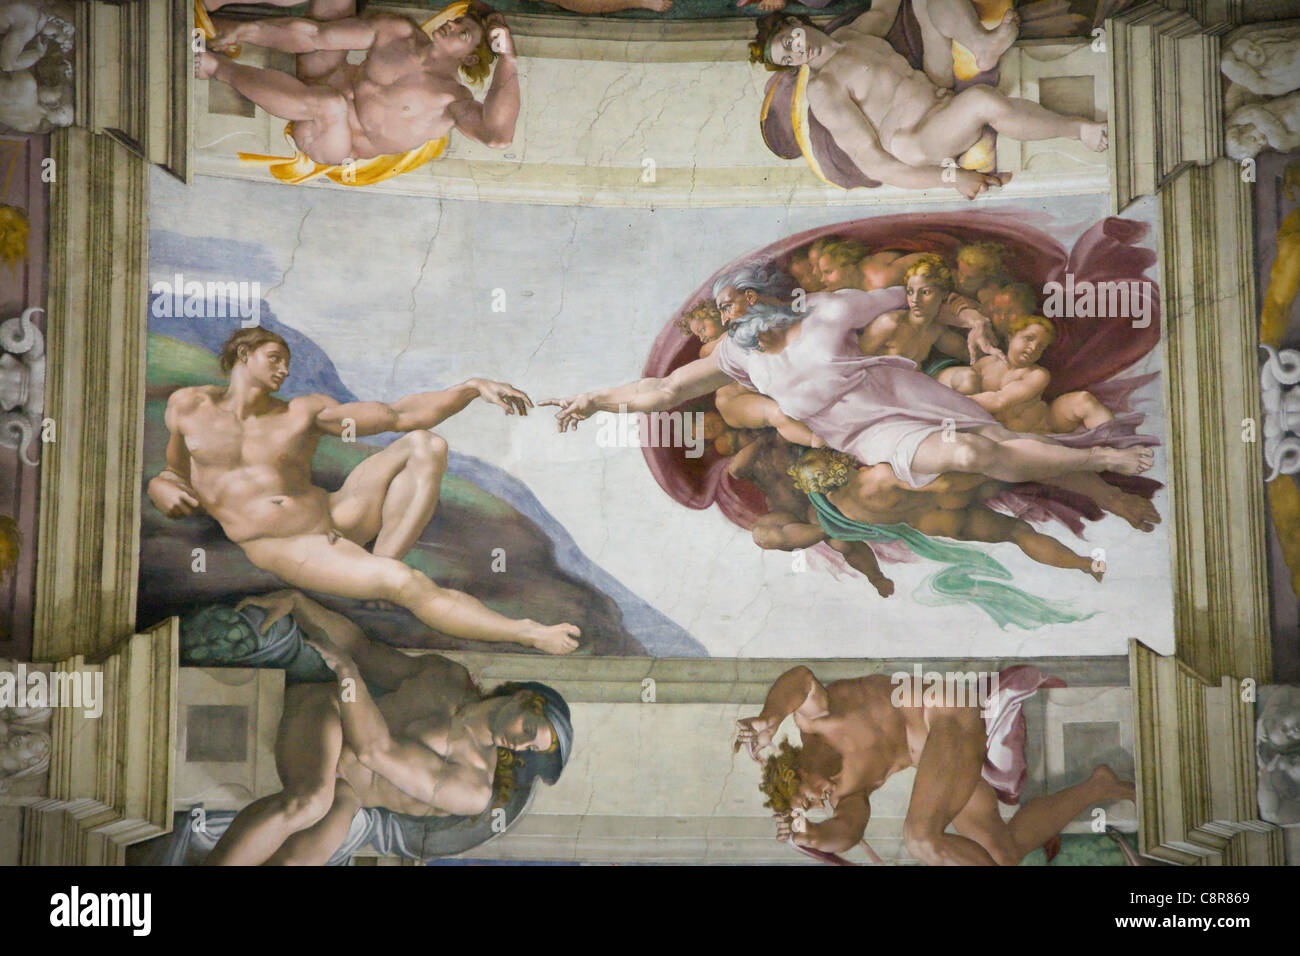 The Sistine Chapel, Rome Stock Photo